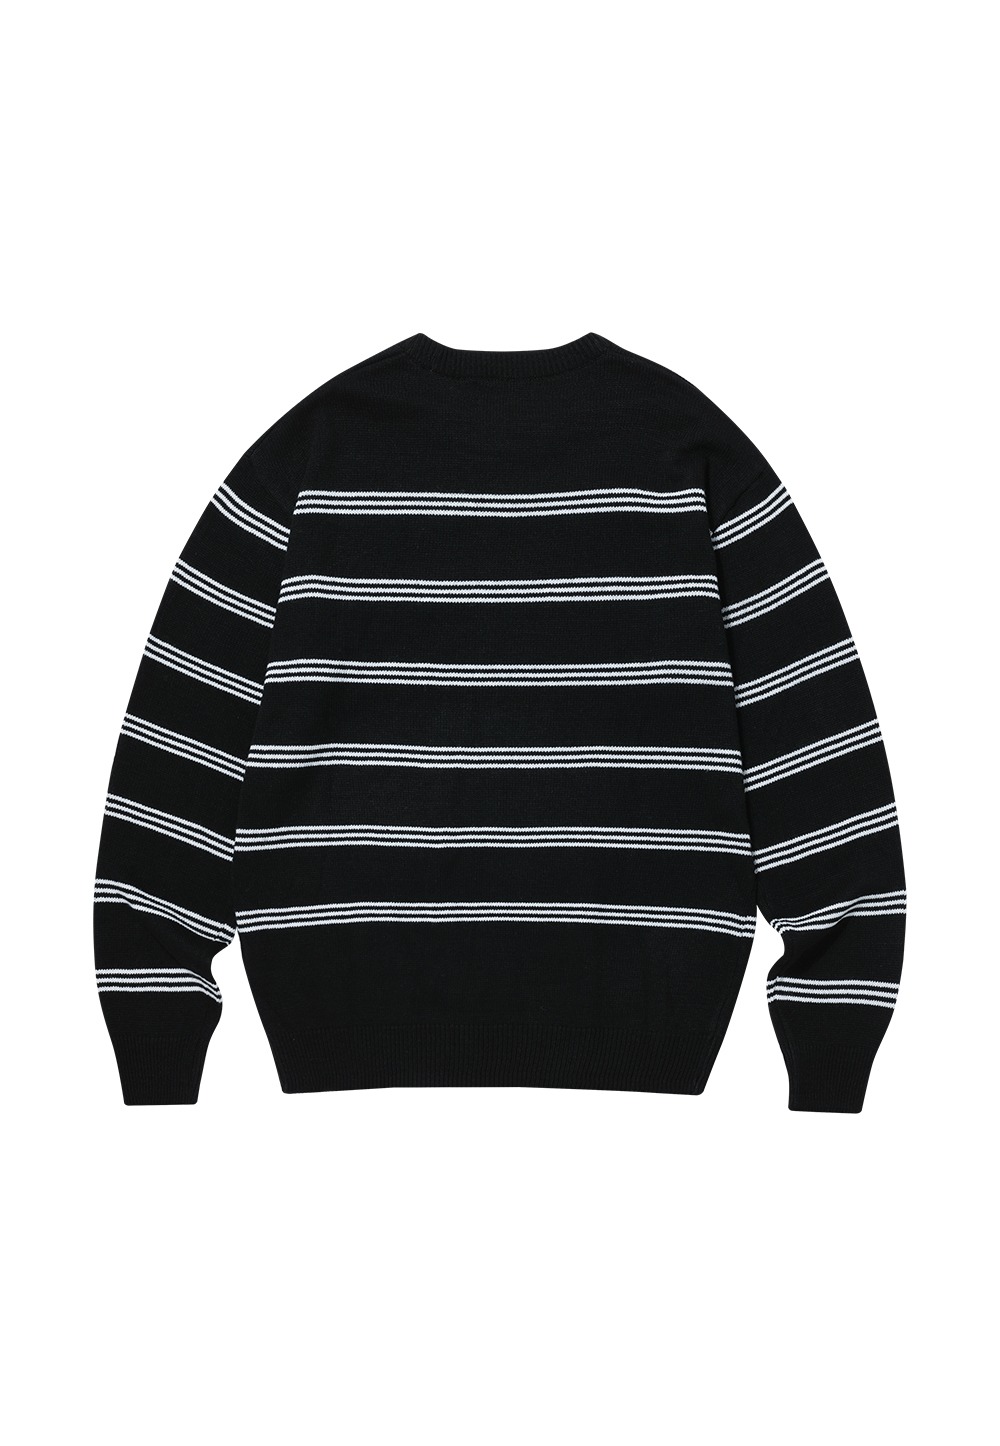 Signature stripe knit - BLACK